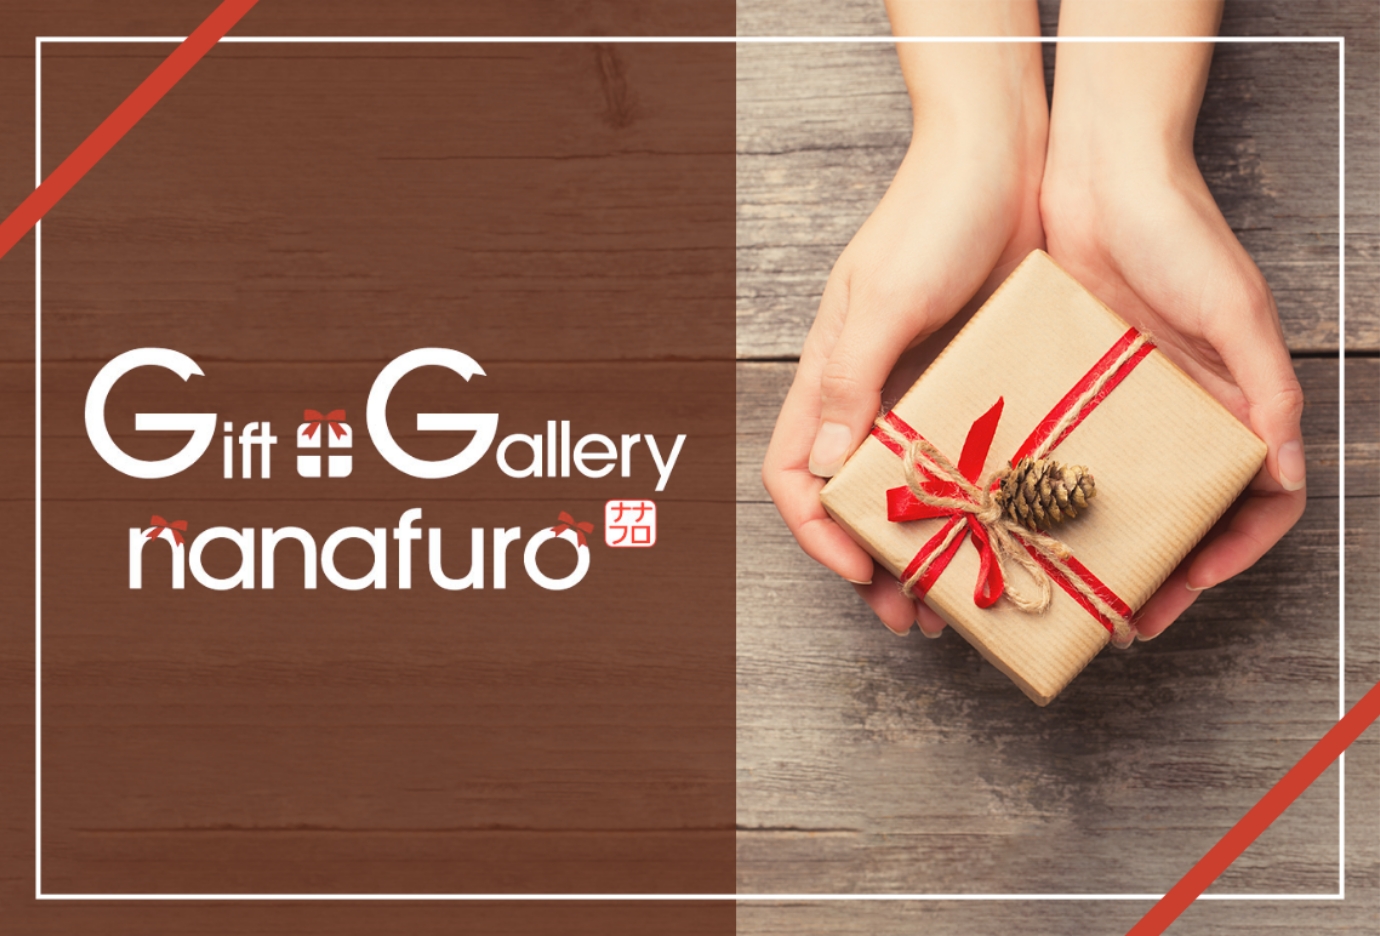 Gift Gallery nanafuro